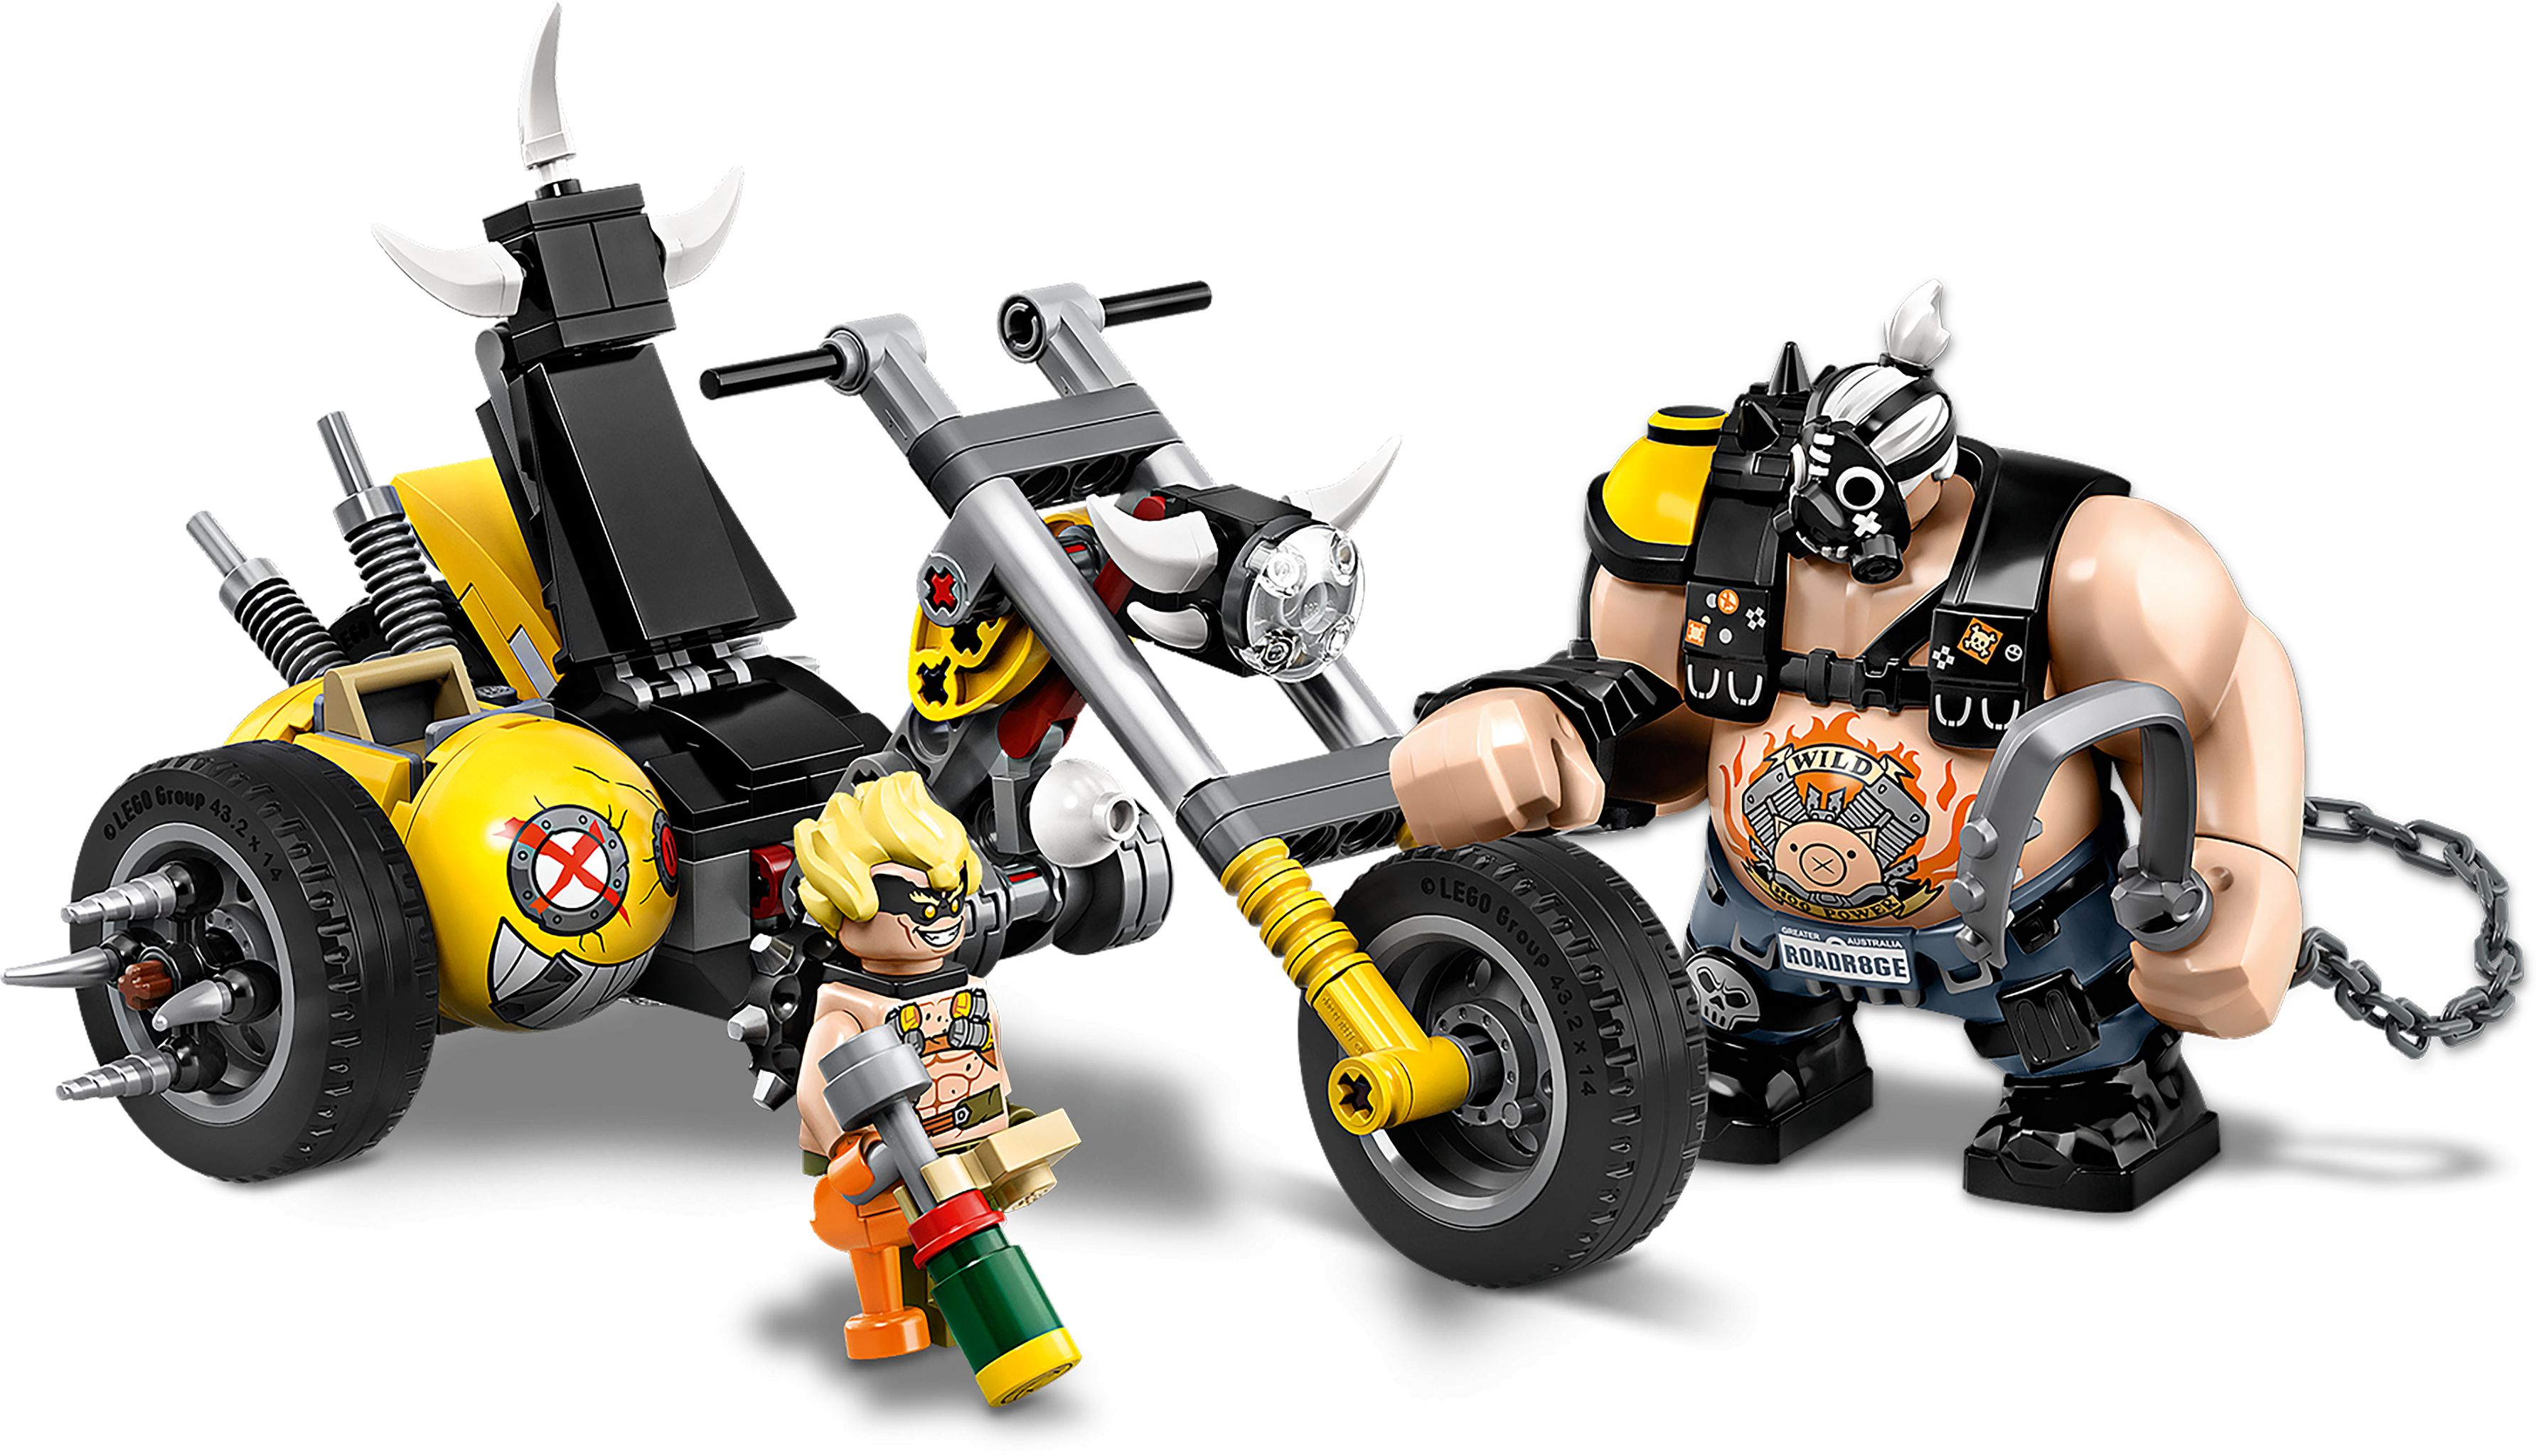 LEGO Overwatch 75977 Junkertown Bike LEGO_75977_alt2.jpg